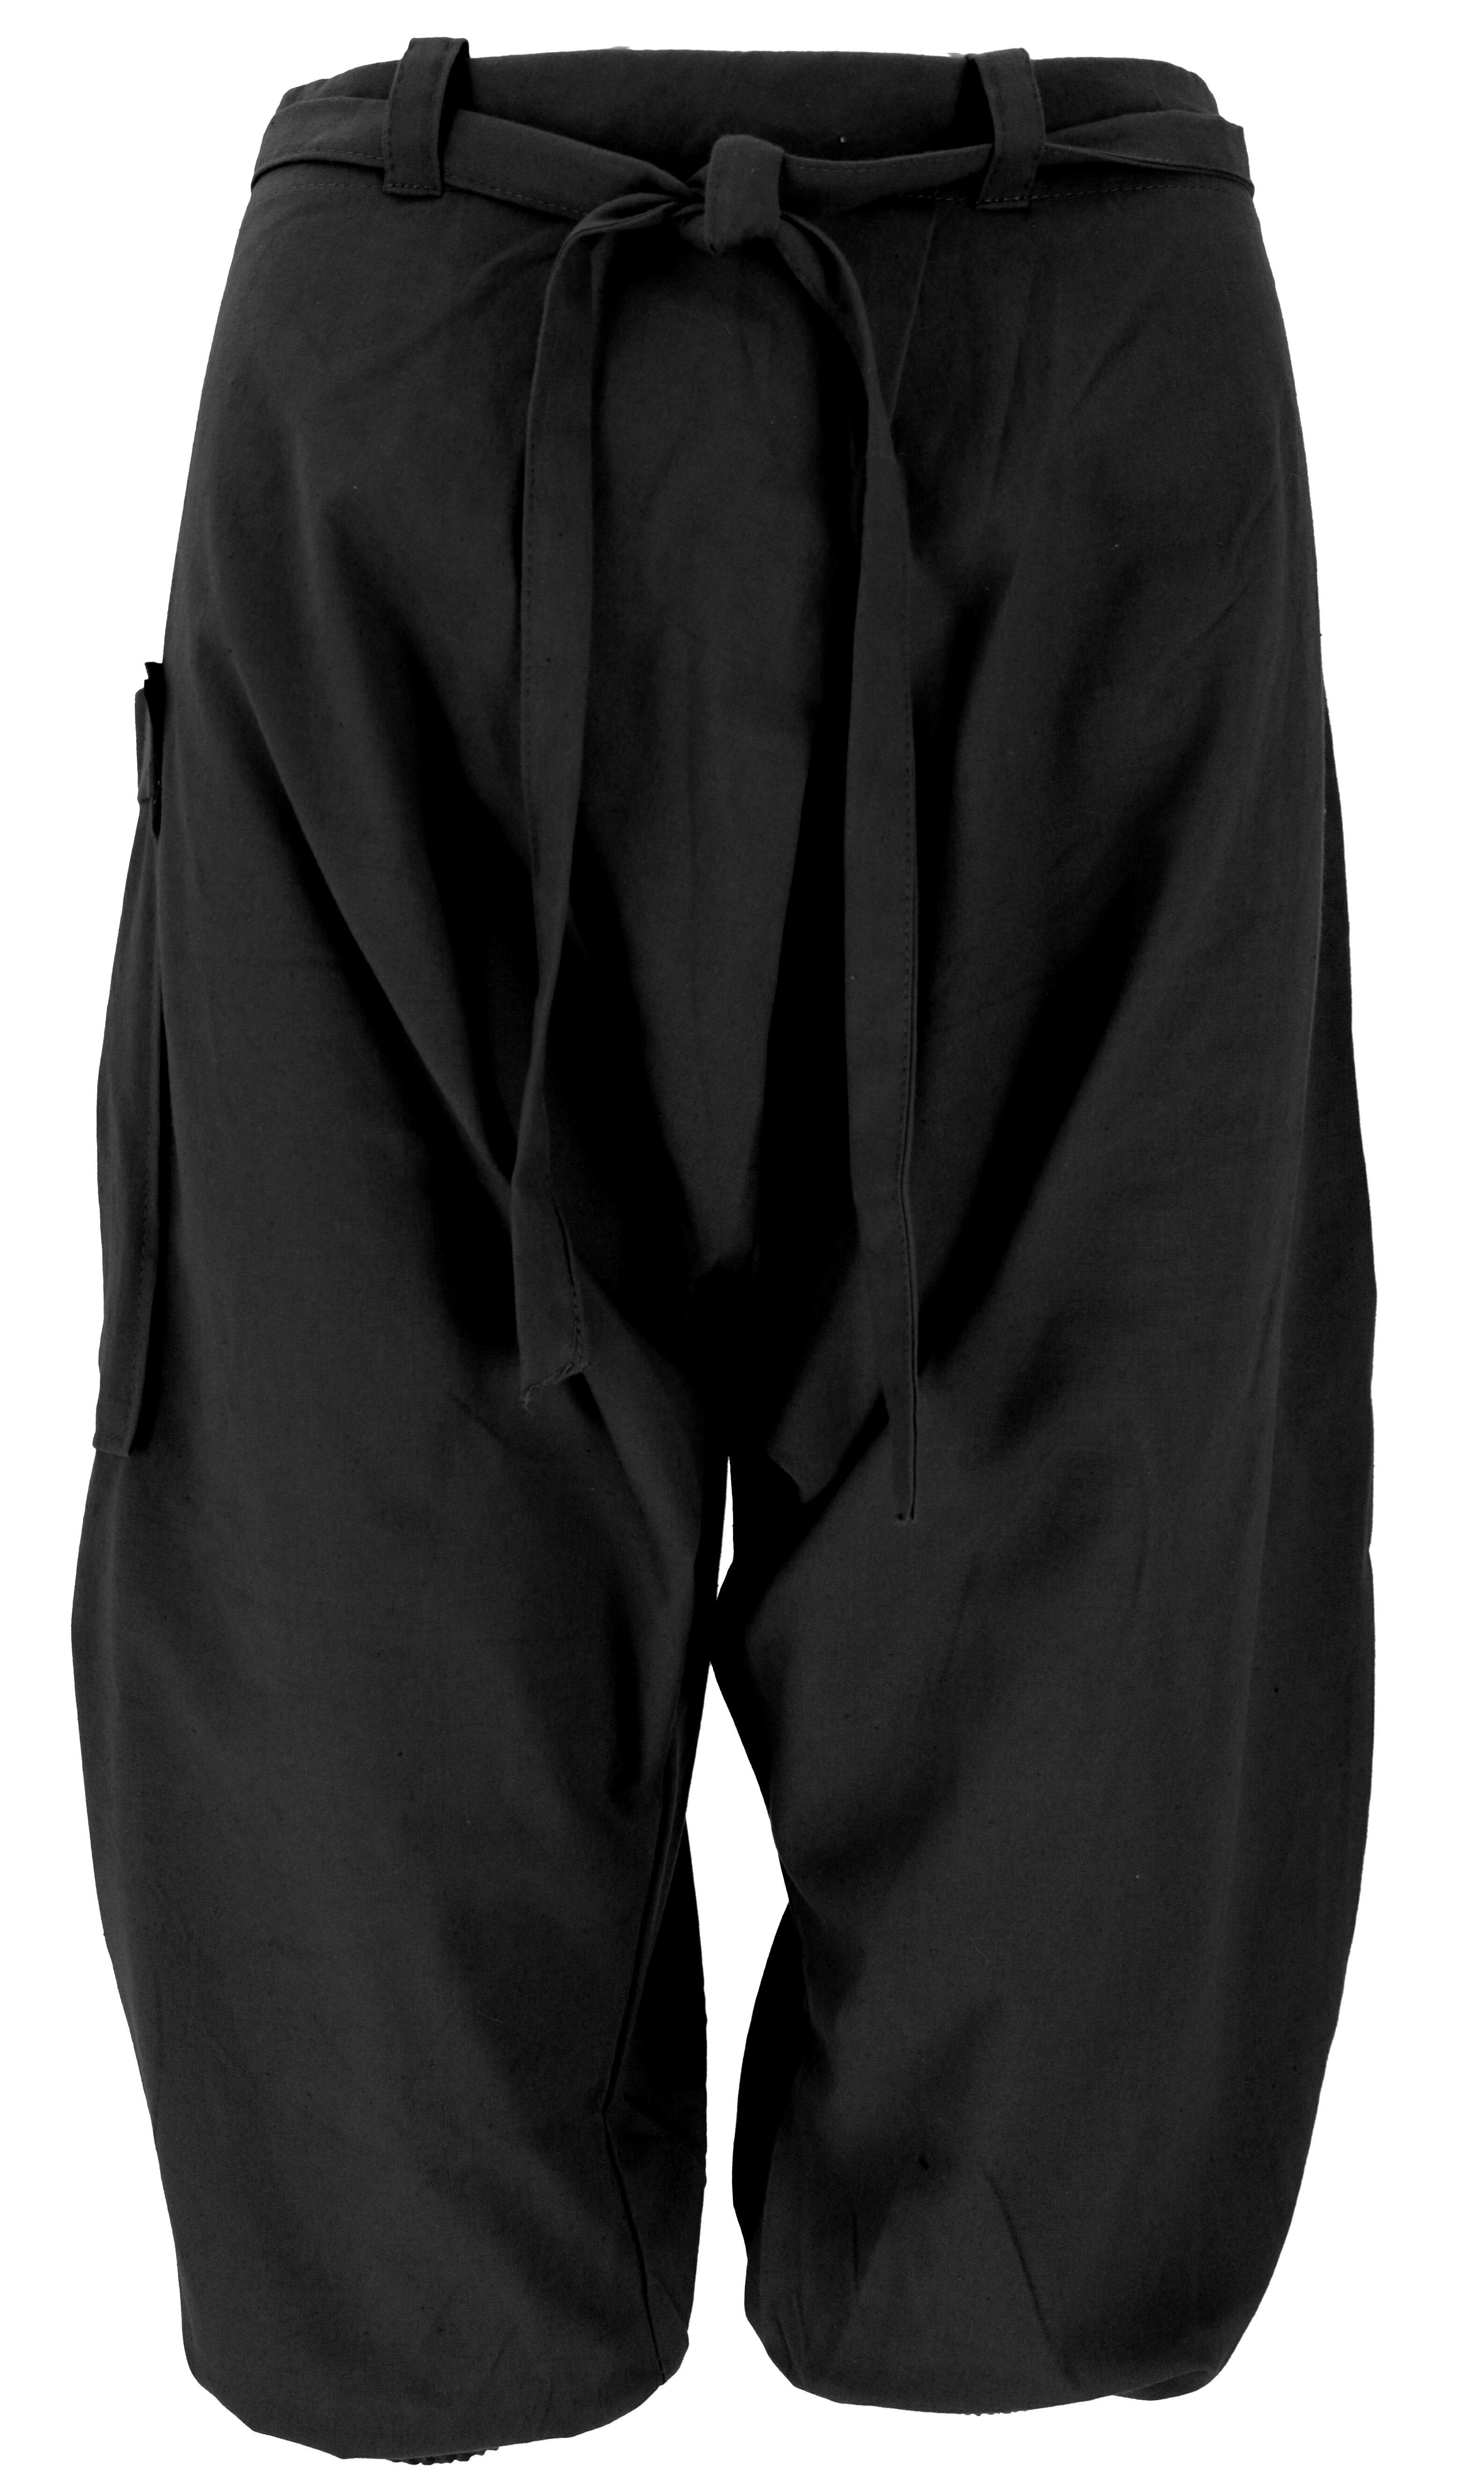 Guru-Shop Relaxhose Baggy Shorts, Sarouel Hose - schwarz Ethno Style, alternative Bekleidung